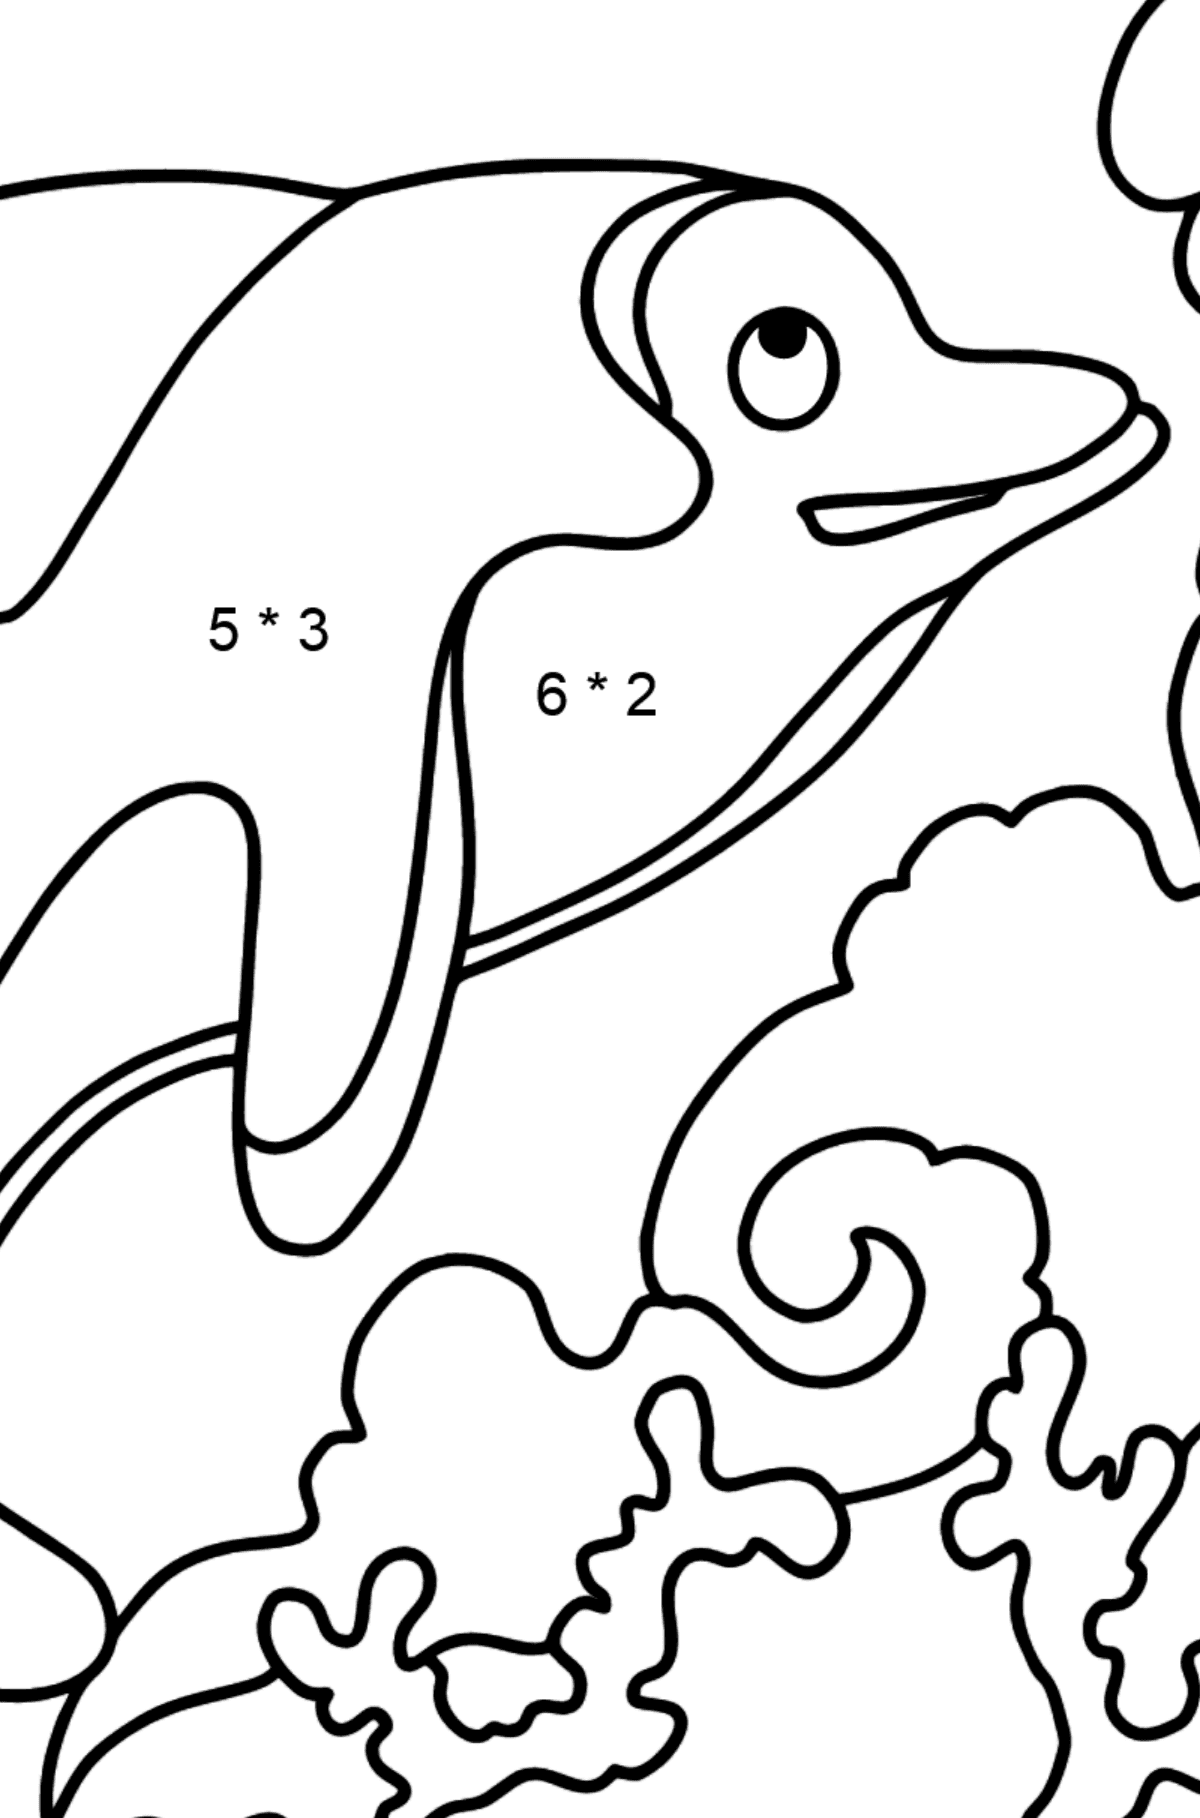 Розмальовка Дельфін для дітей - Математична Розмальовка Множення для дітей